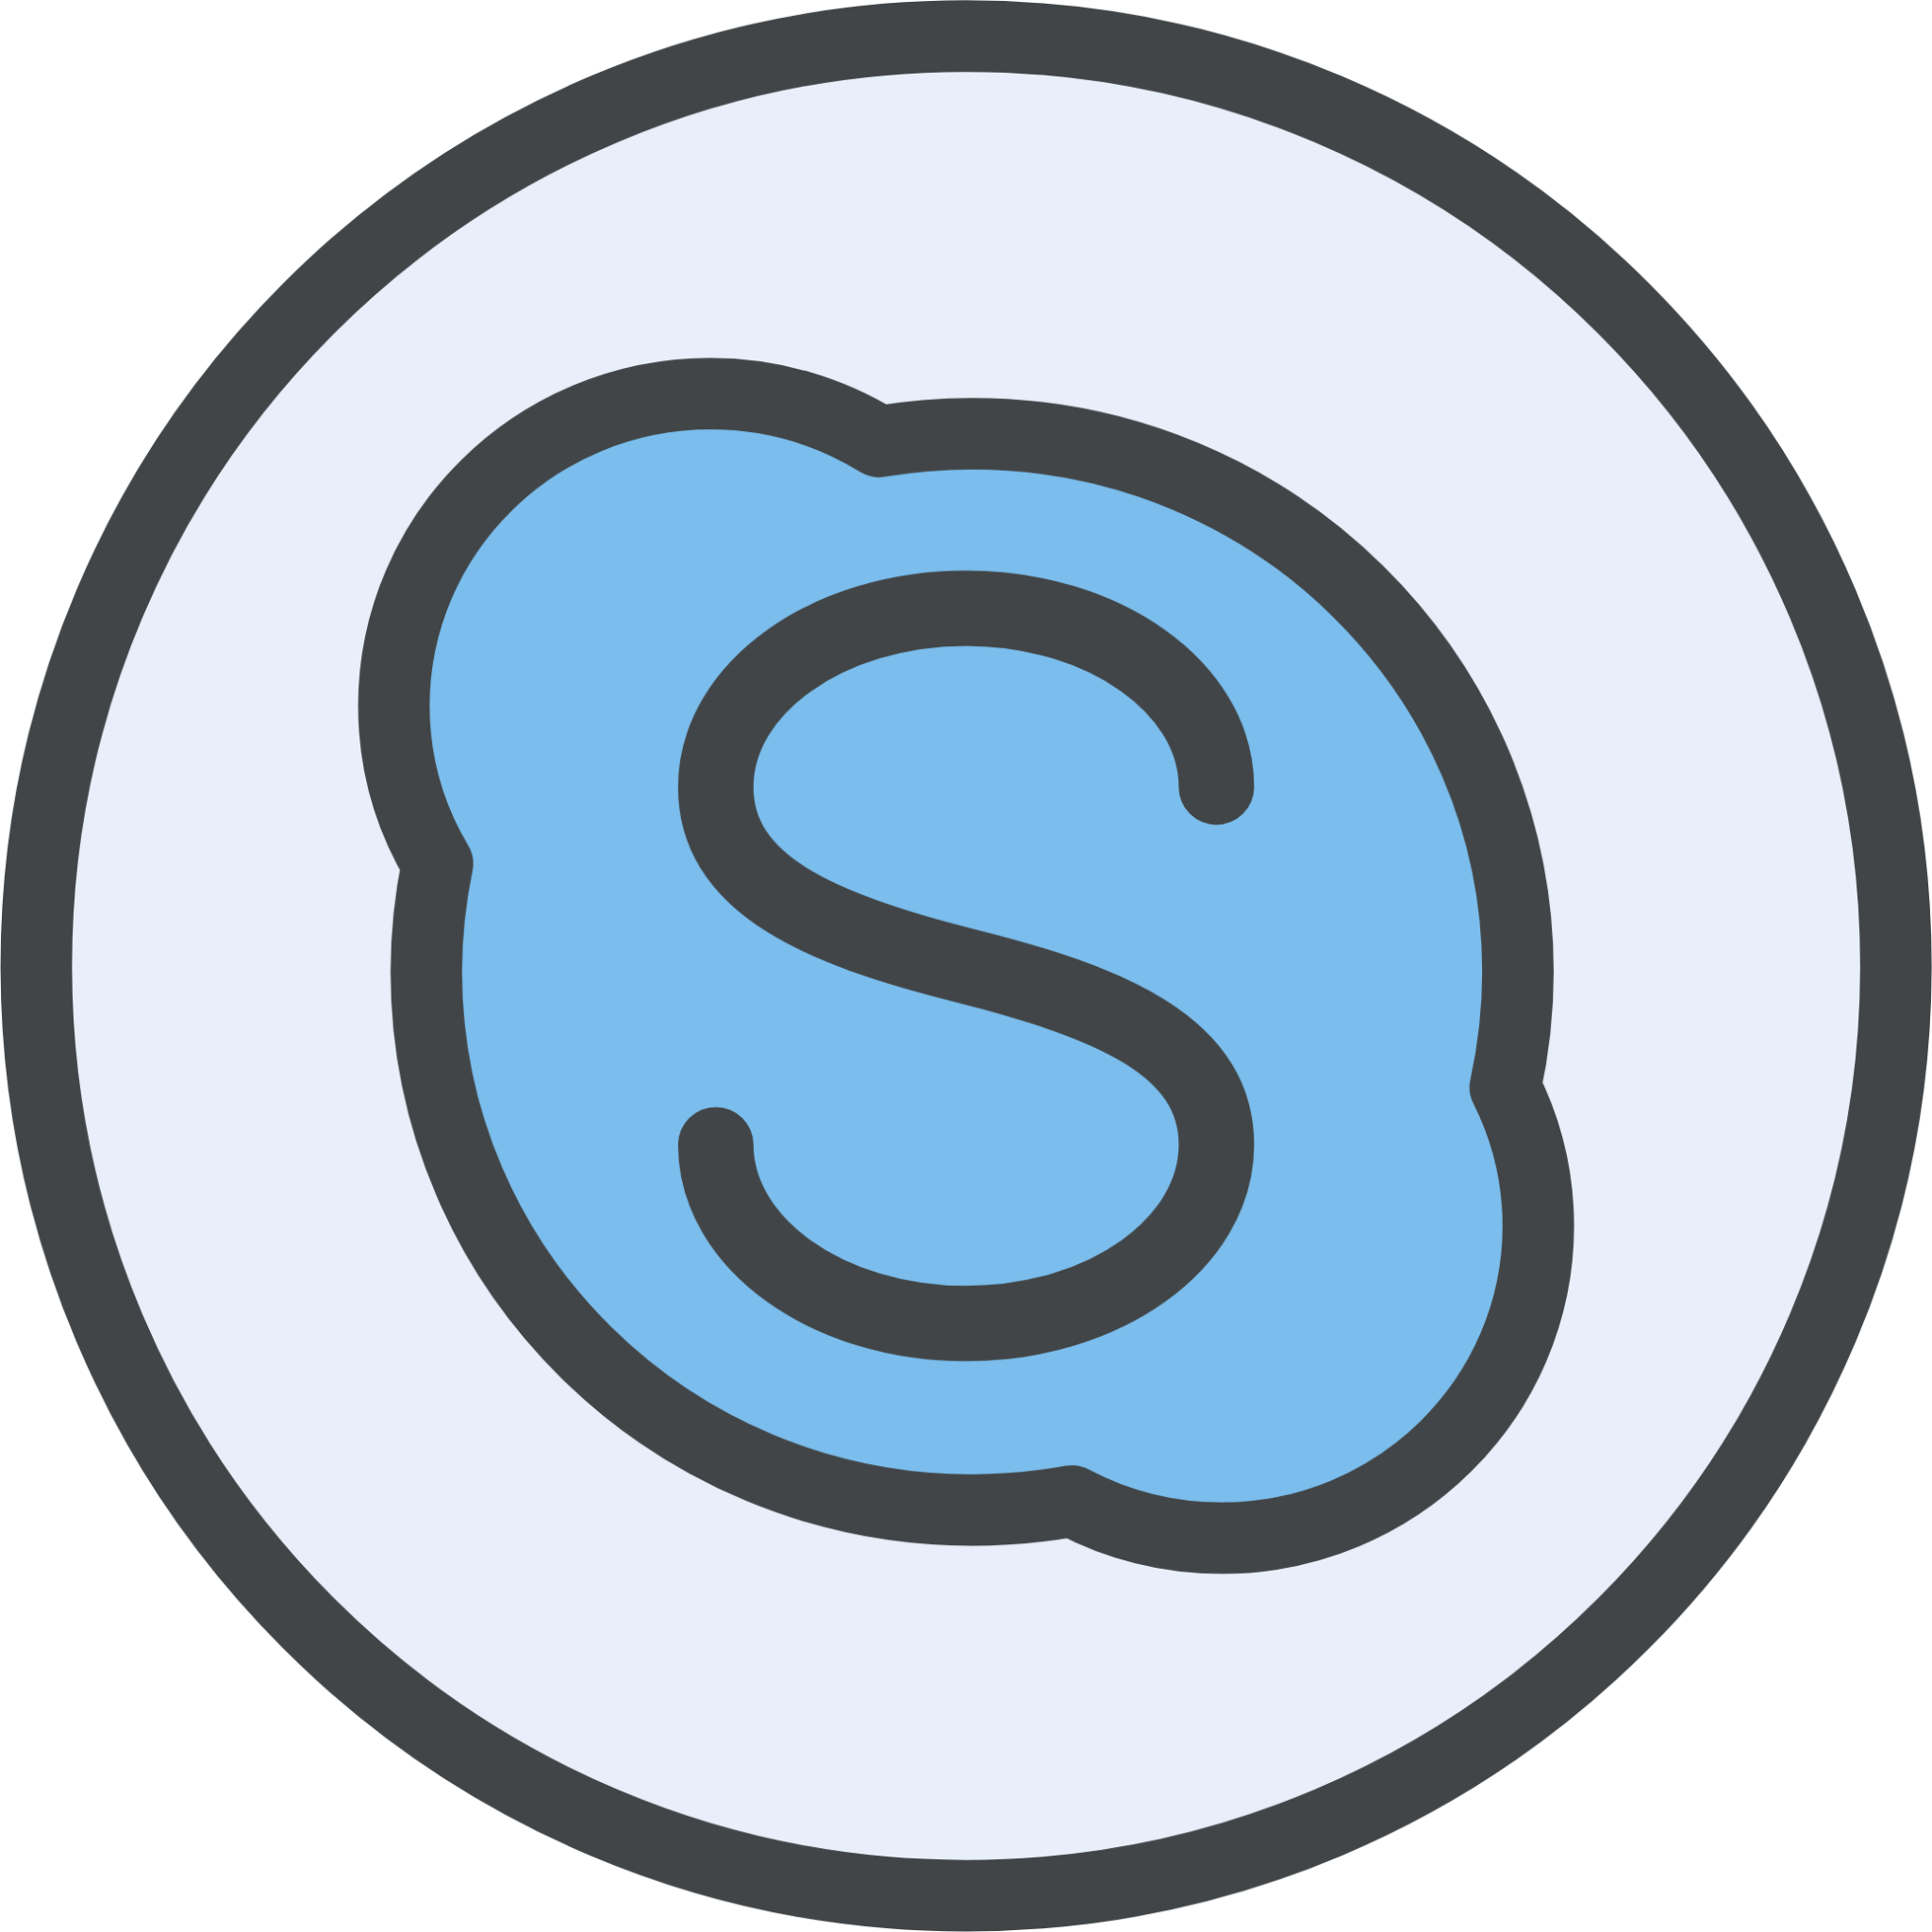 brand skype icon